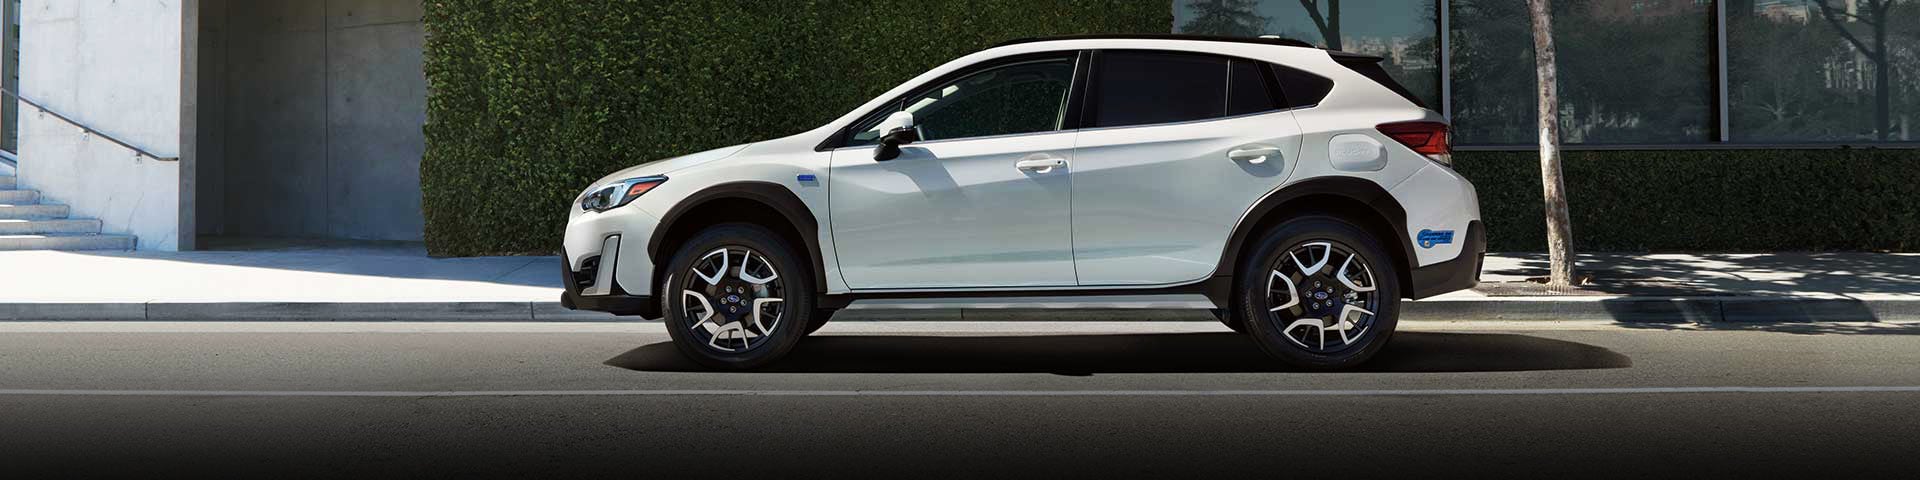 The side profile of a white Subaru Crosstrek Hybrid | Dutch Miller Subaru in Charleston WV